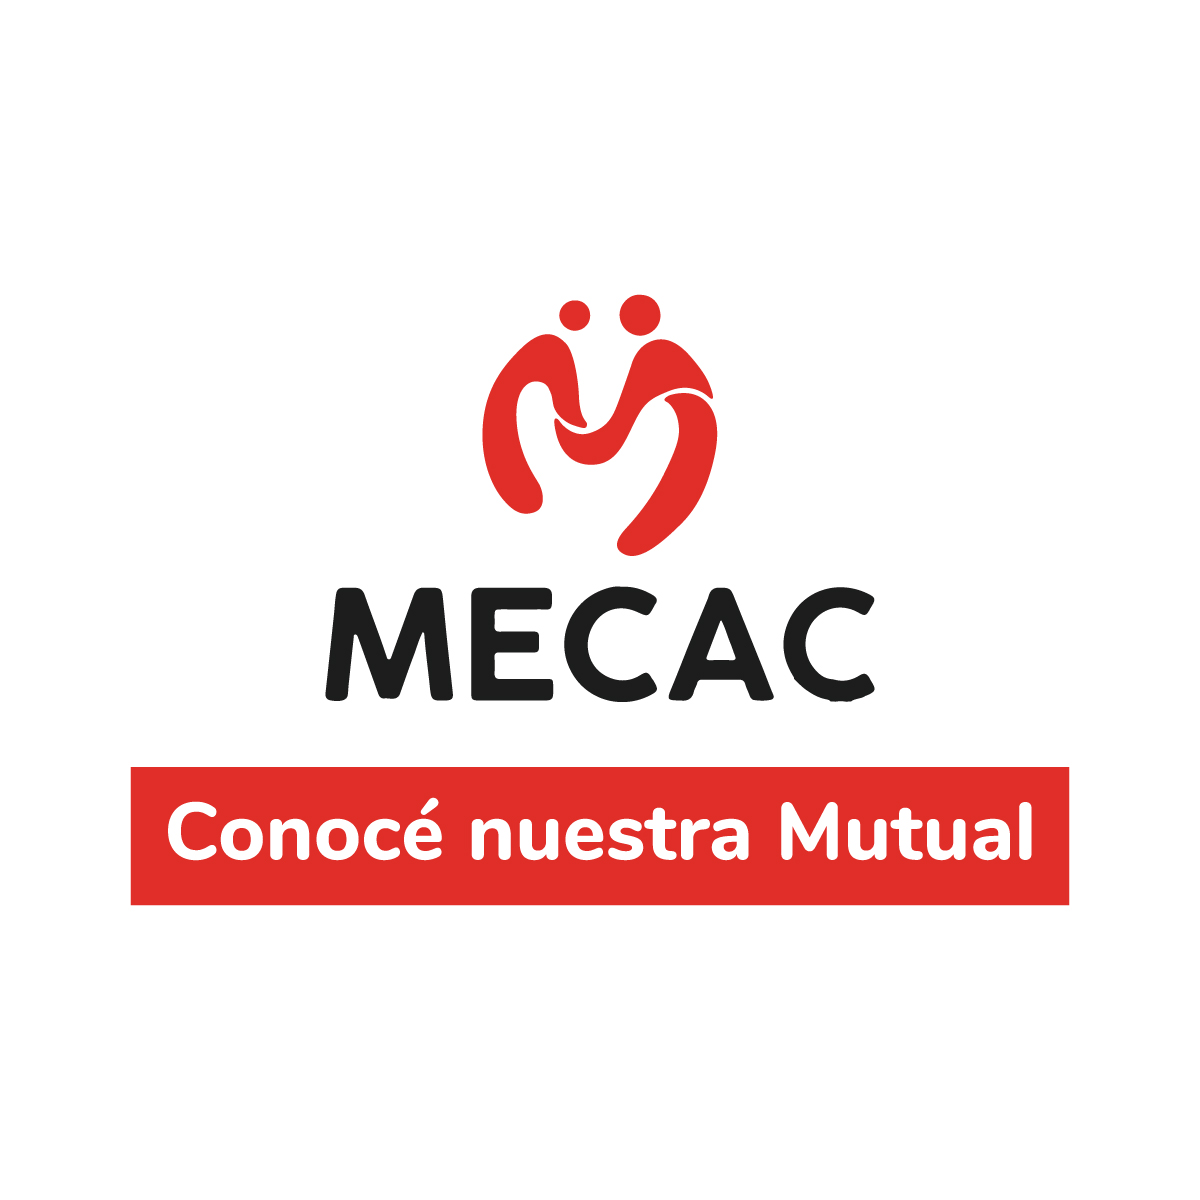 MECAC